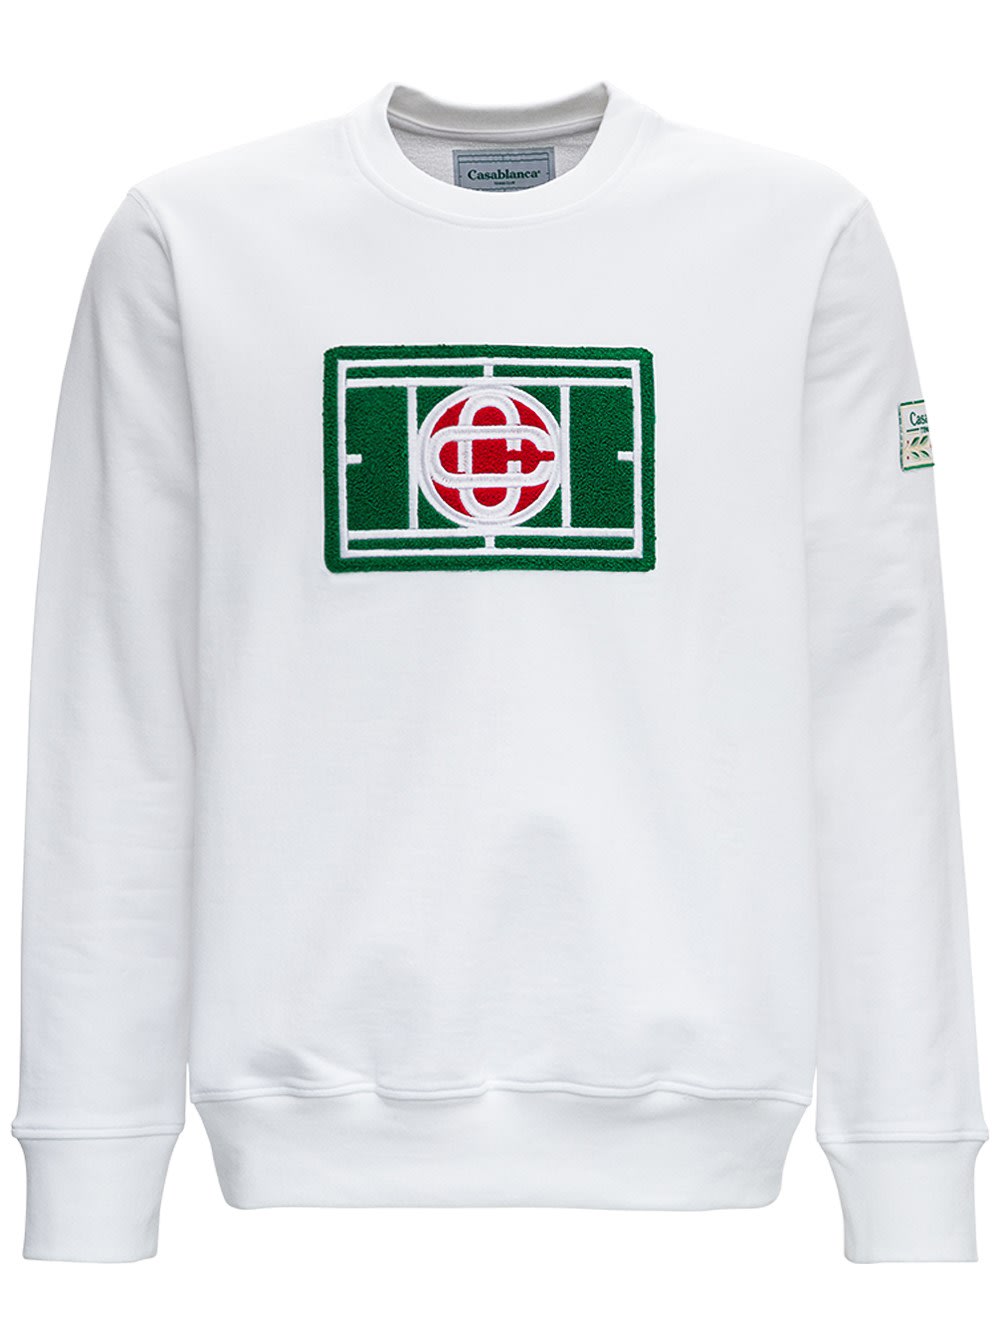 Casablanca tennis court sweatshirt with sponge logo